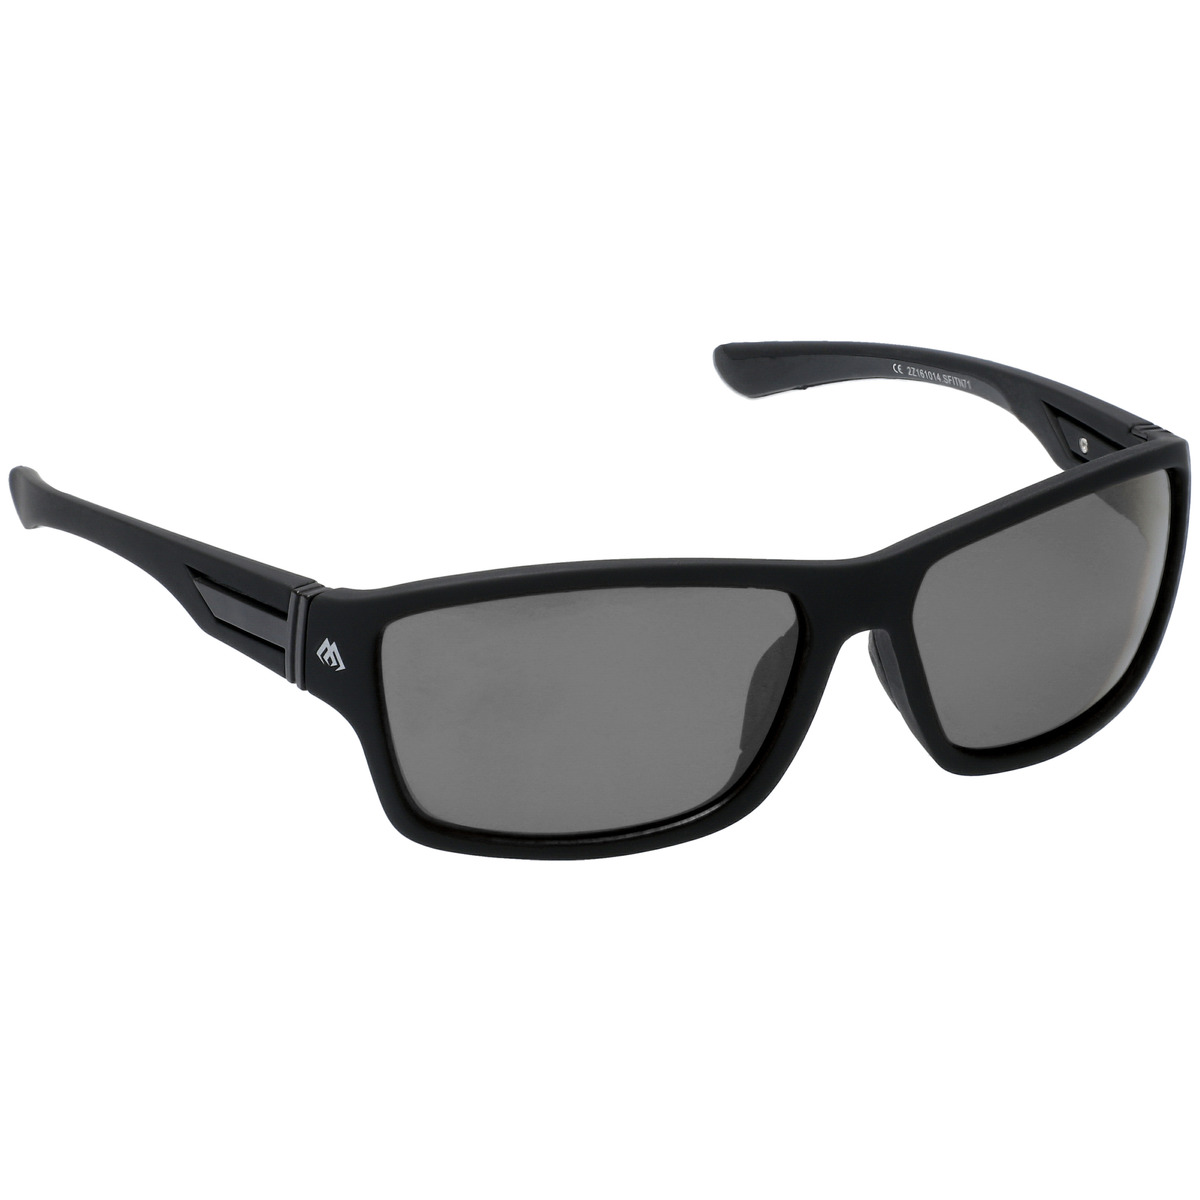 Mikado Sunglasses Polarized - 7587 GREY